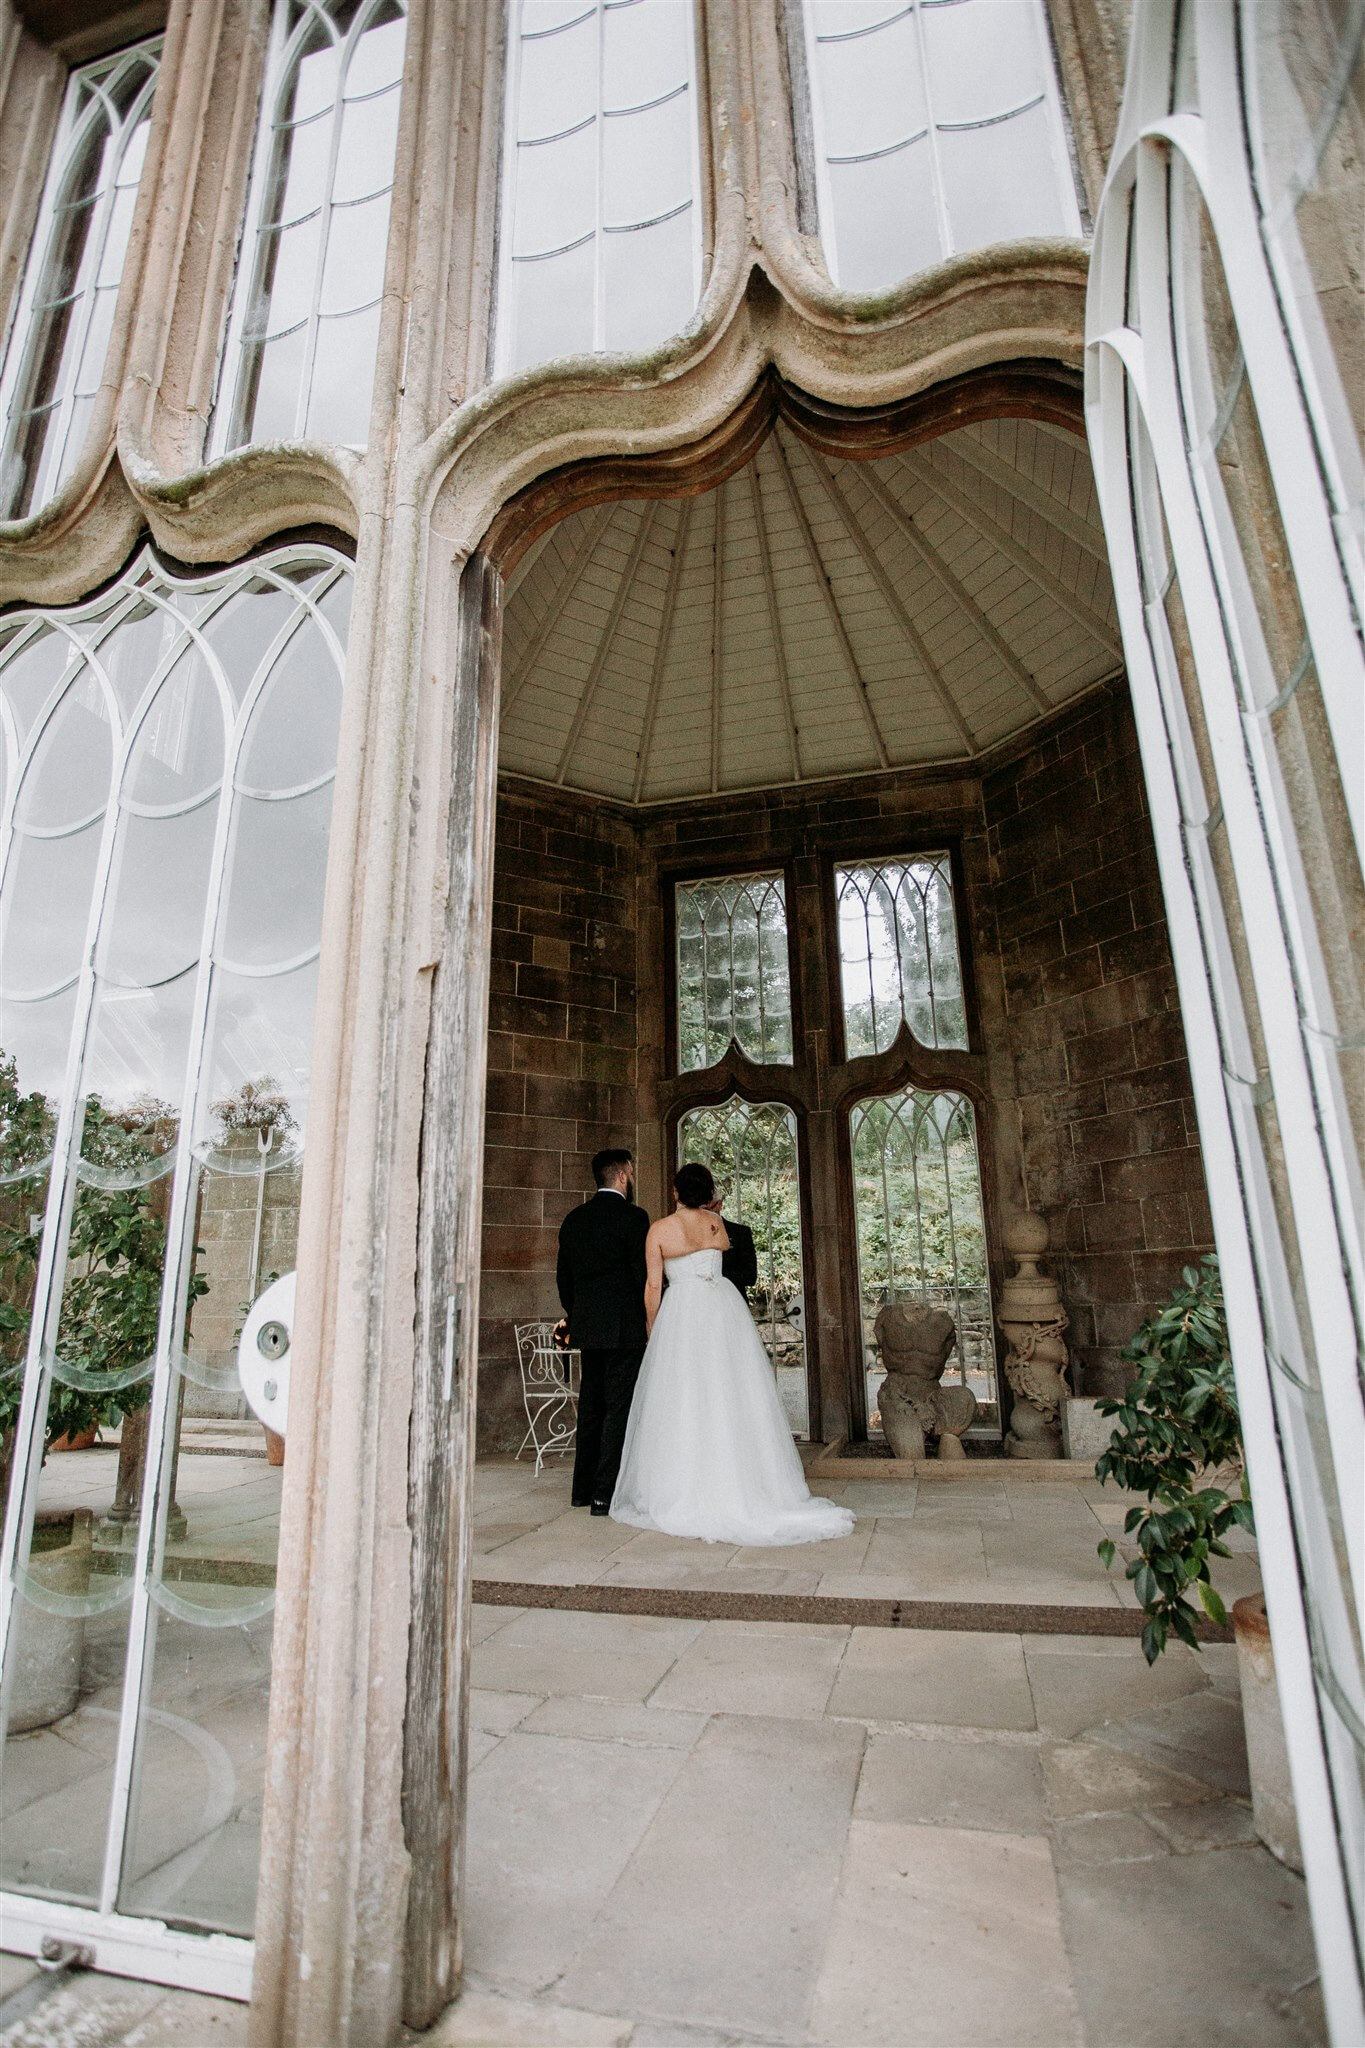 Culzean Castle Scotland elopement wedding ceremony | adventure elopement photographer